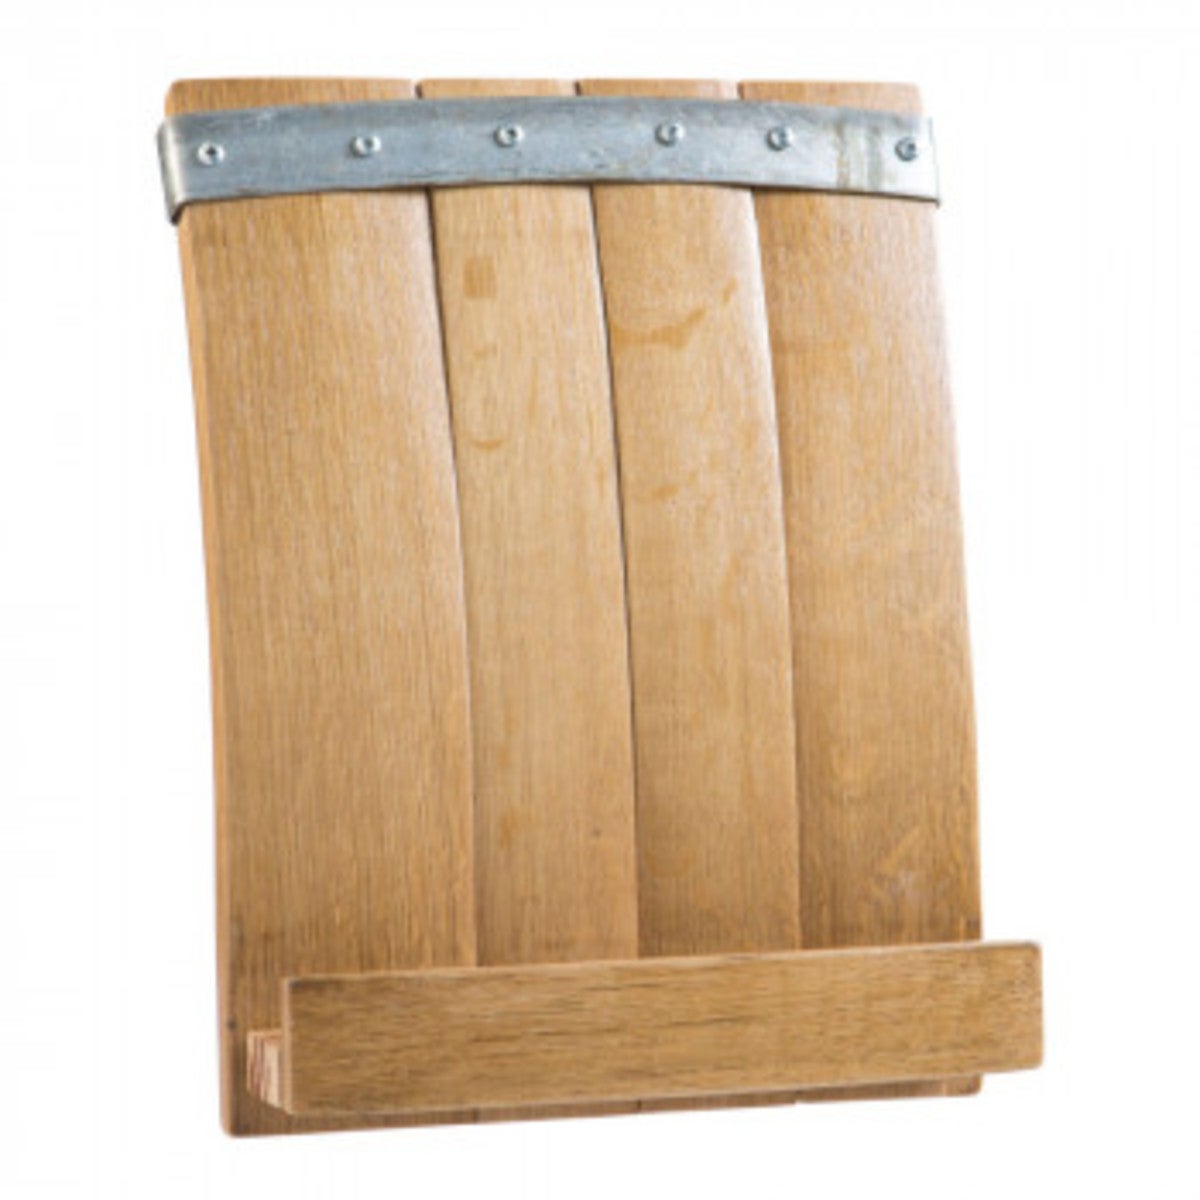 Barrel Stave Cookbook & iPad Stand